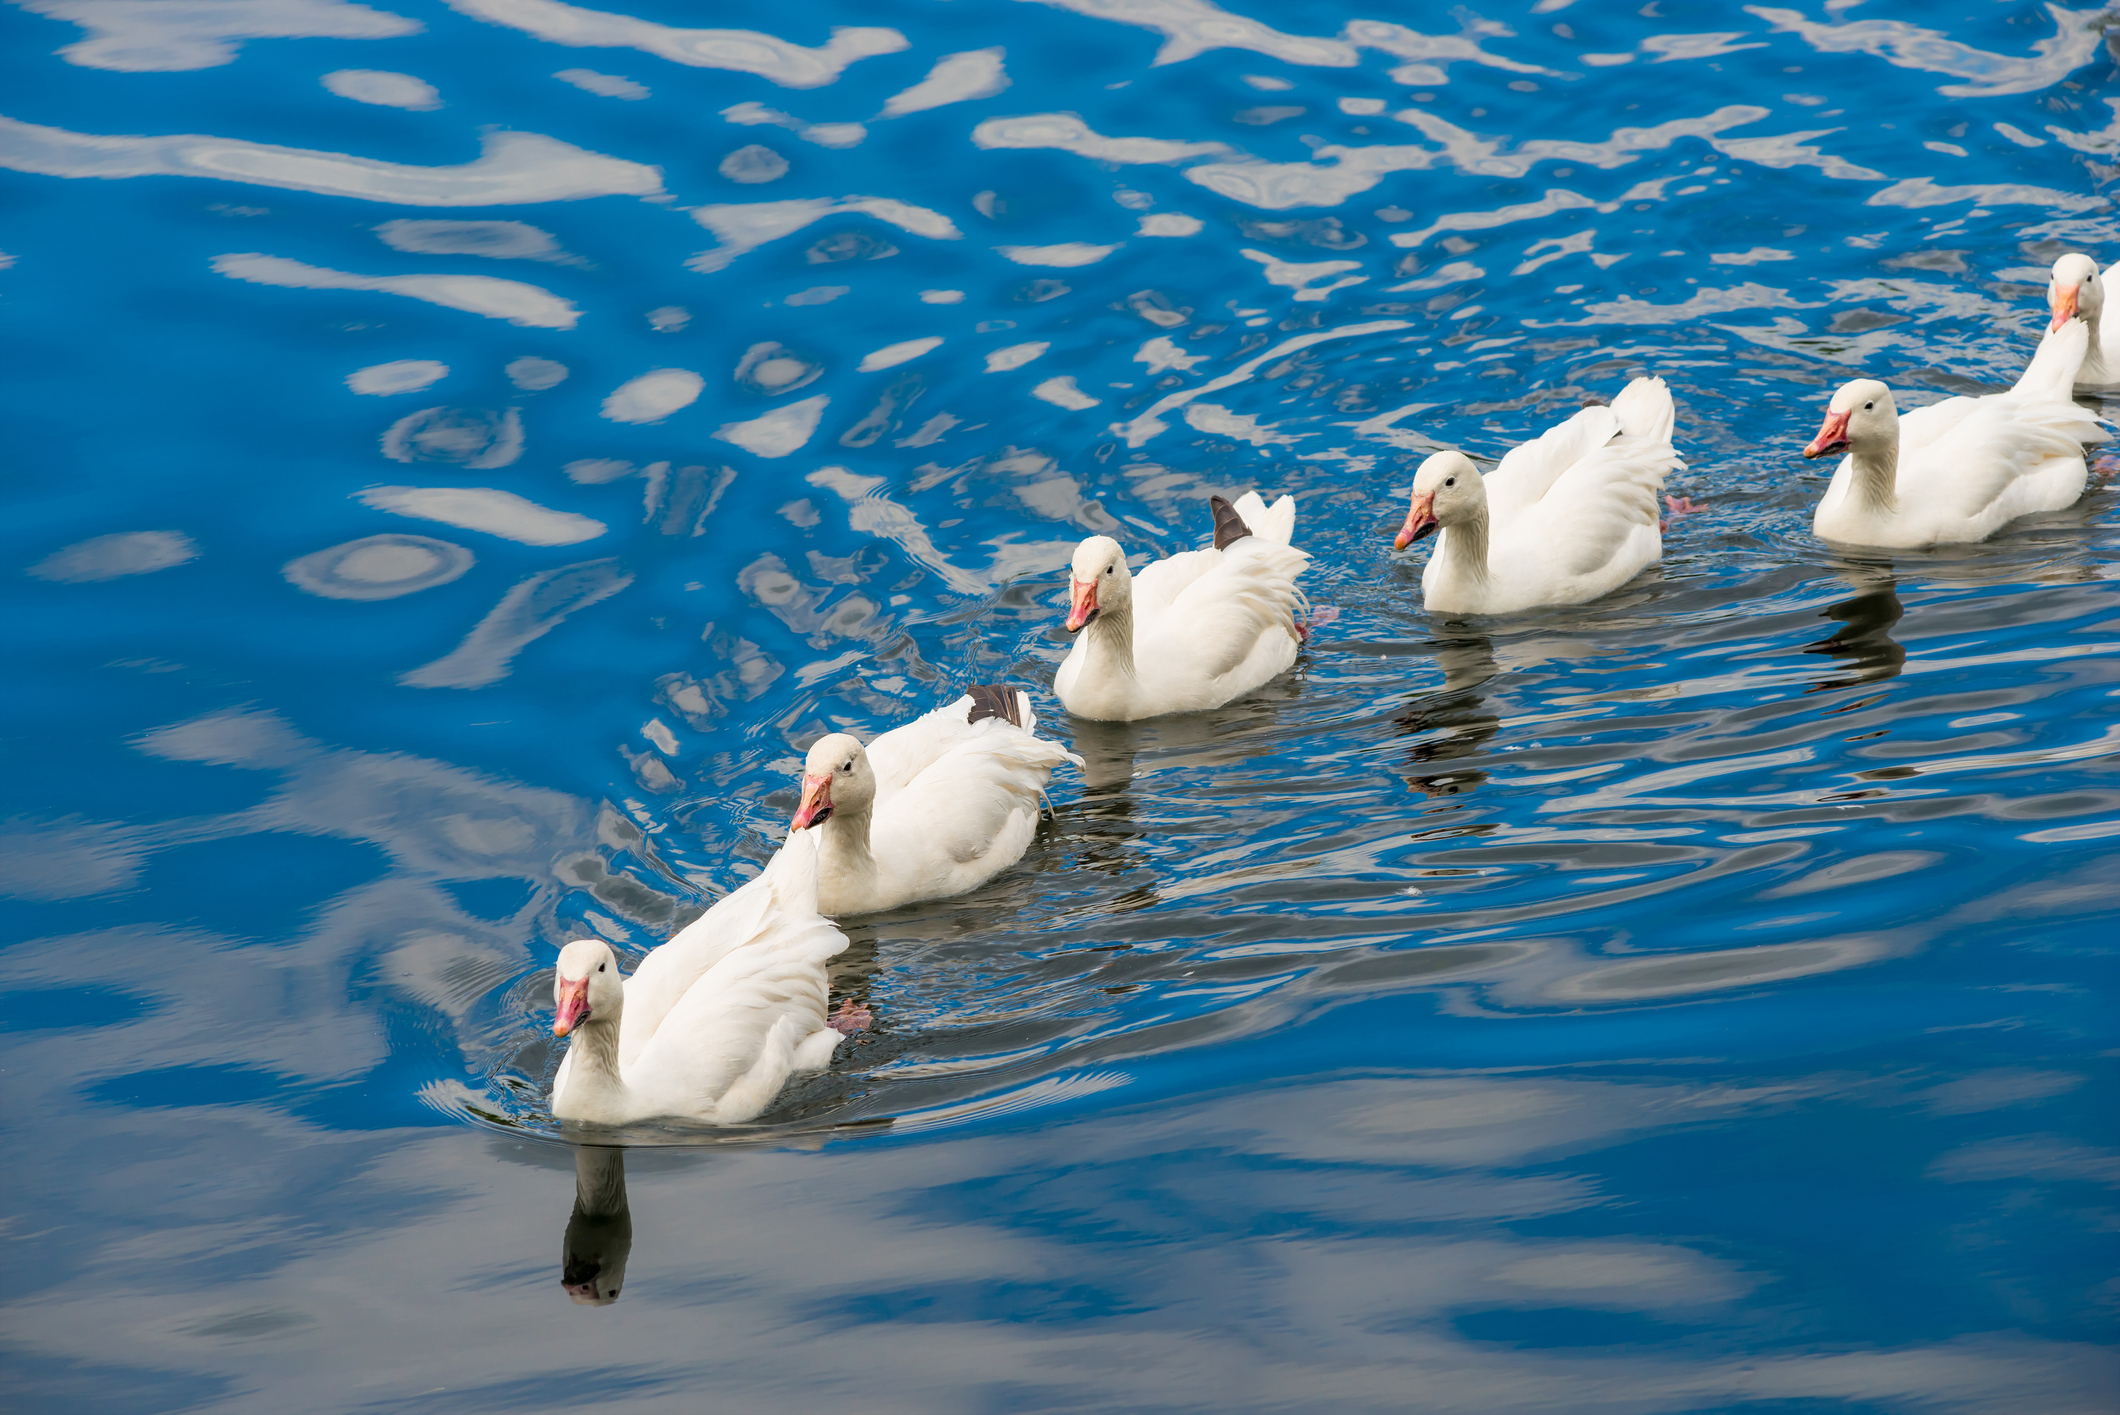 White ducks swimming in a line